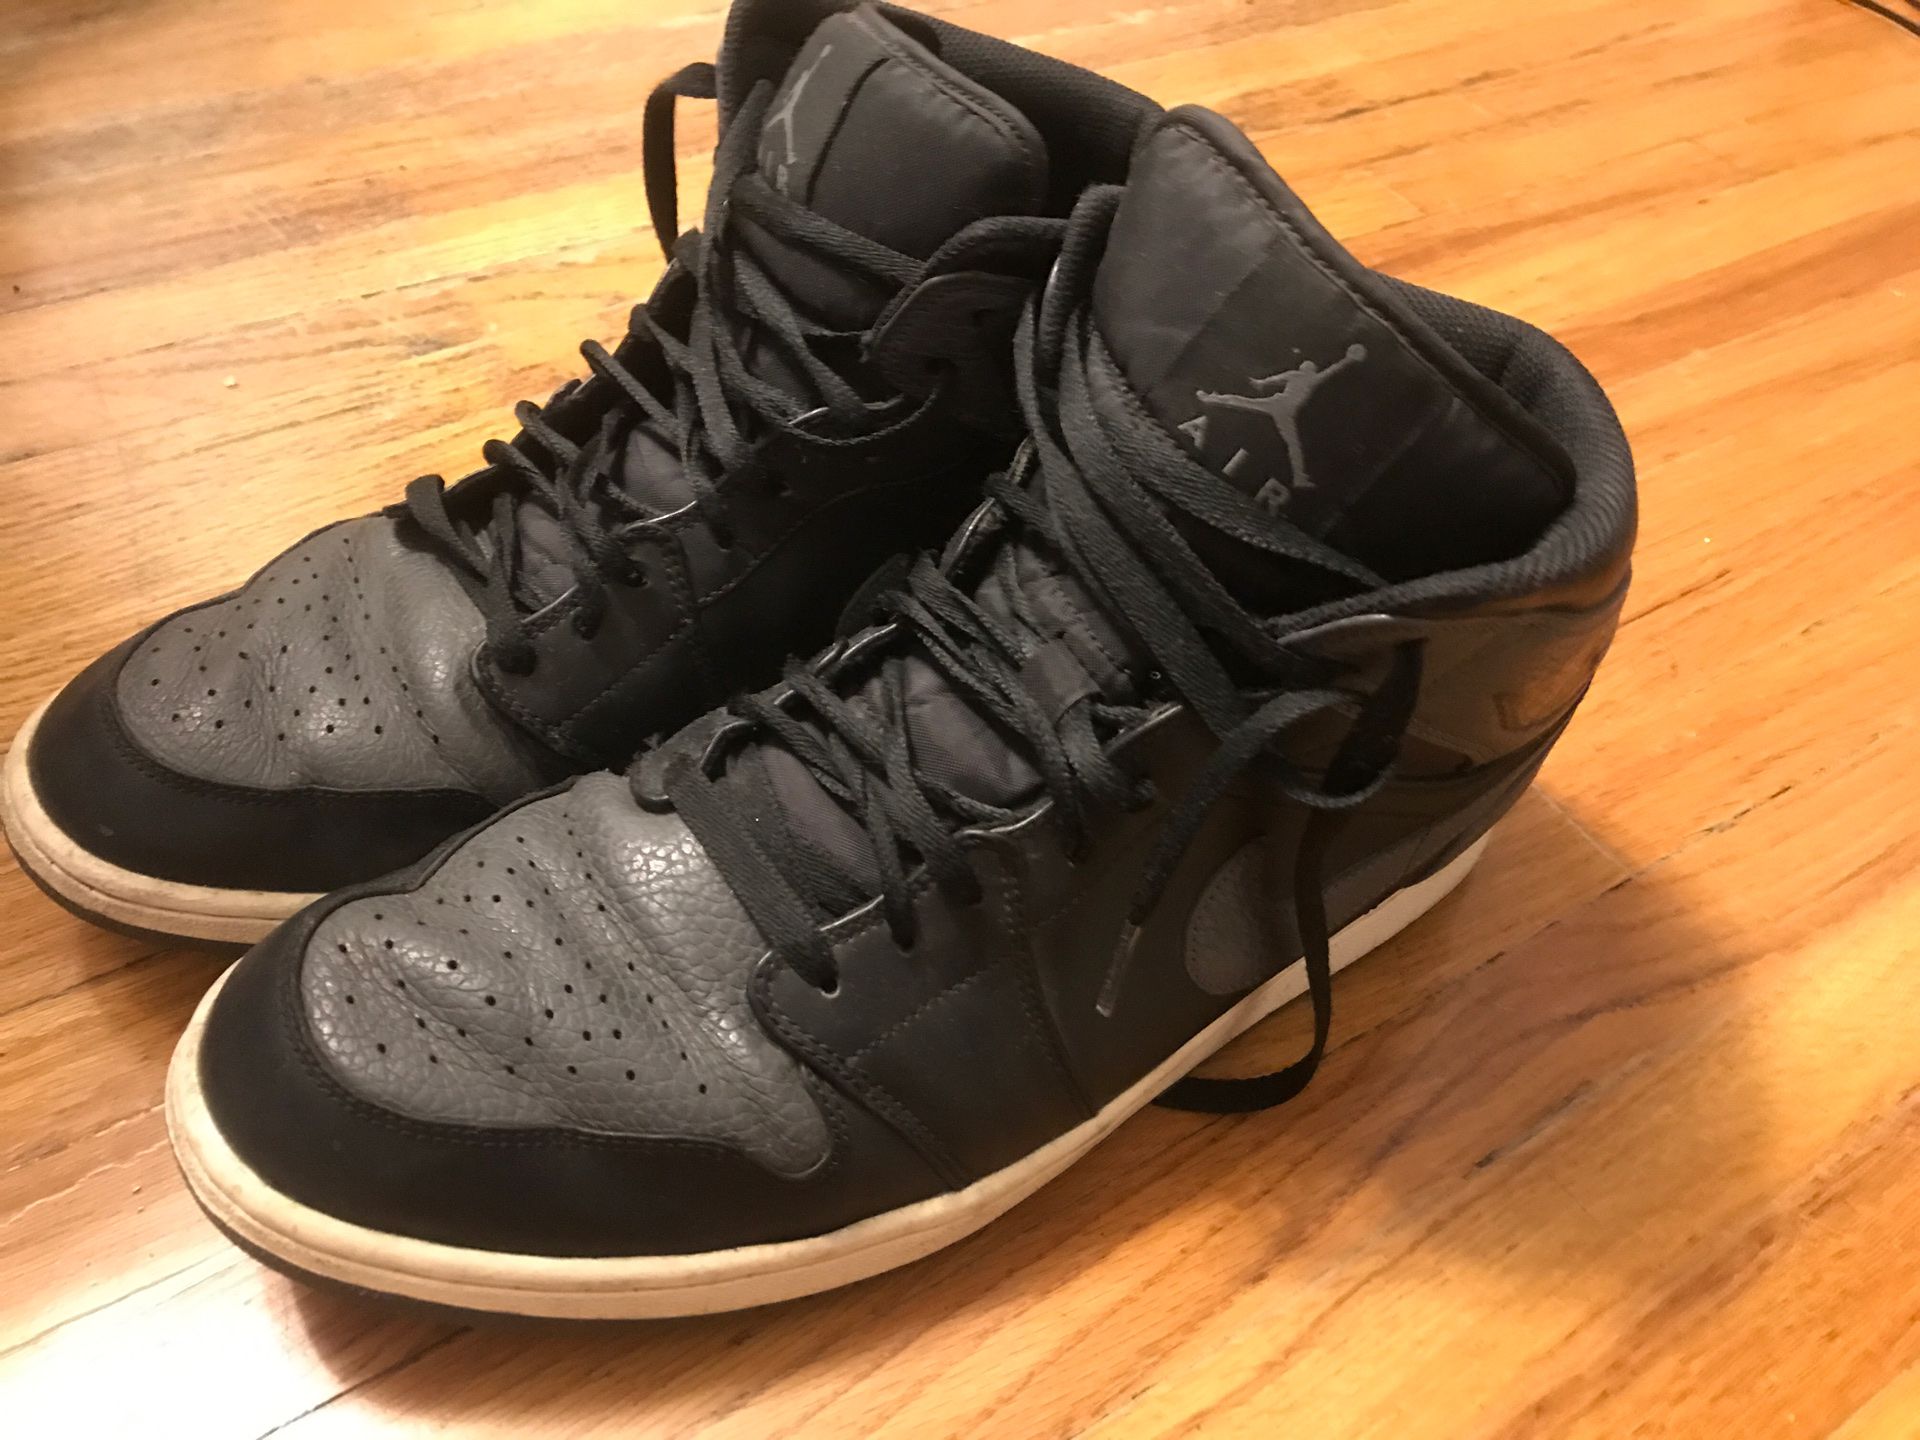 Nike Jordan’s